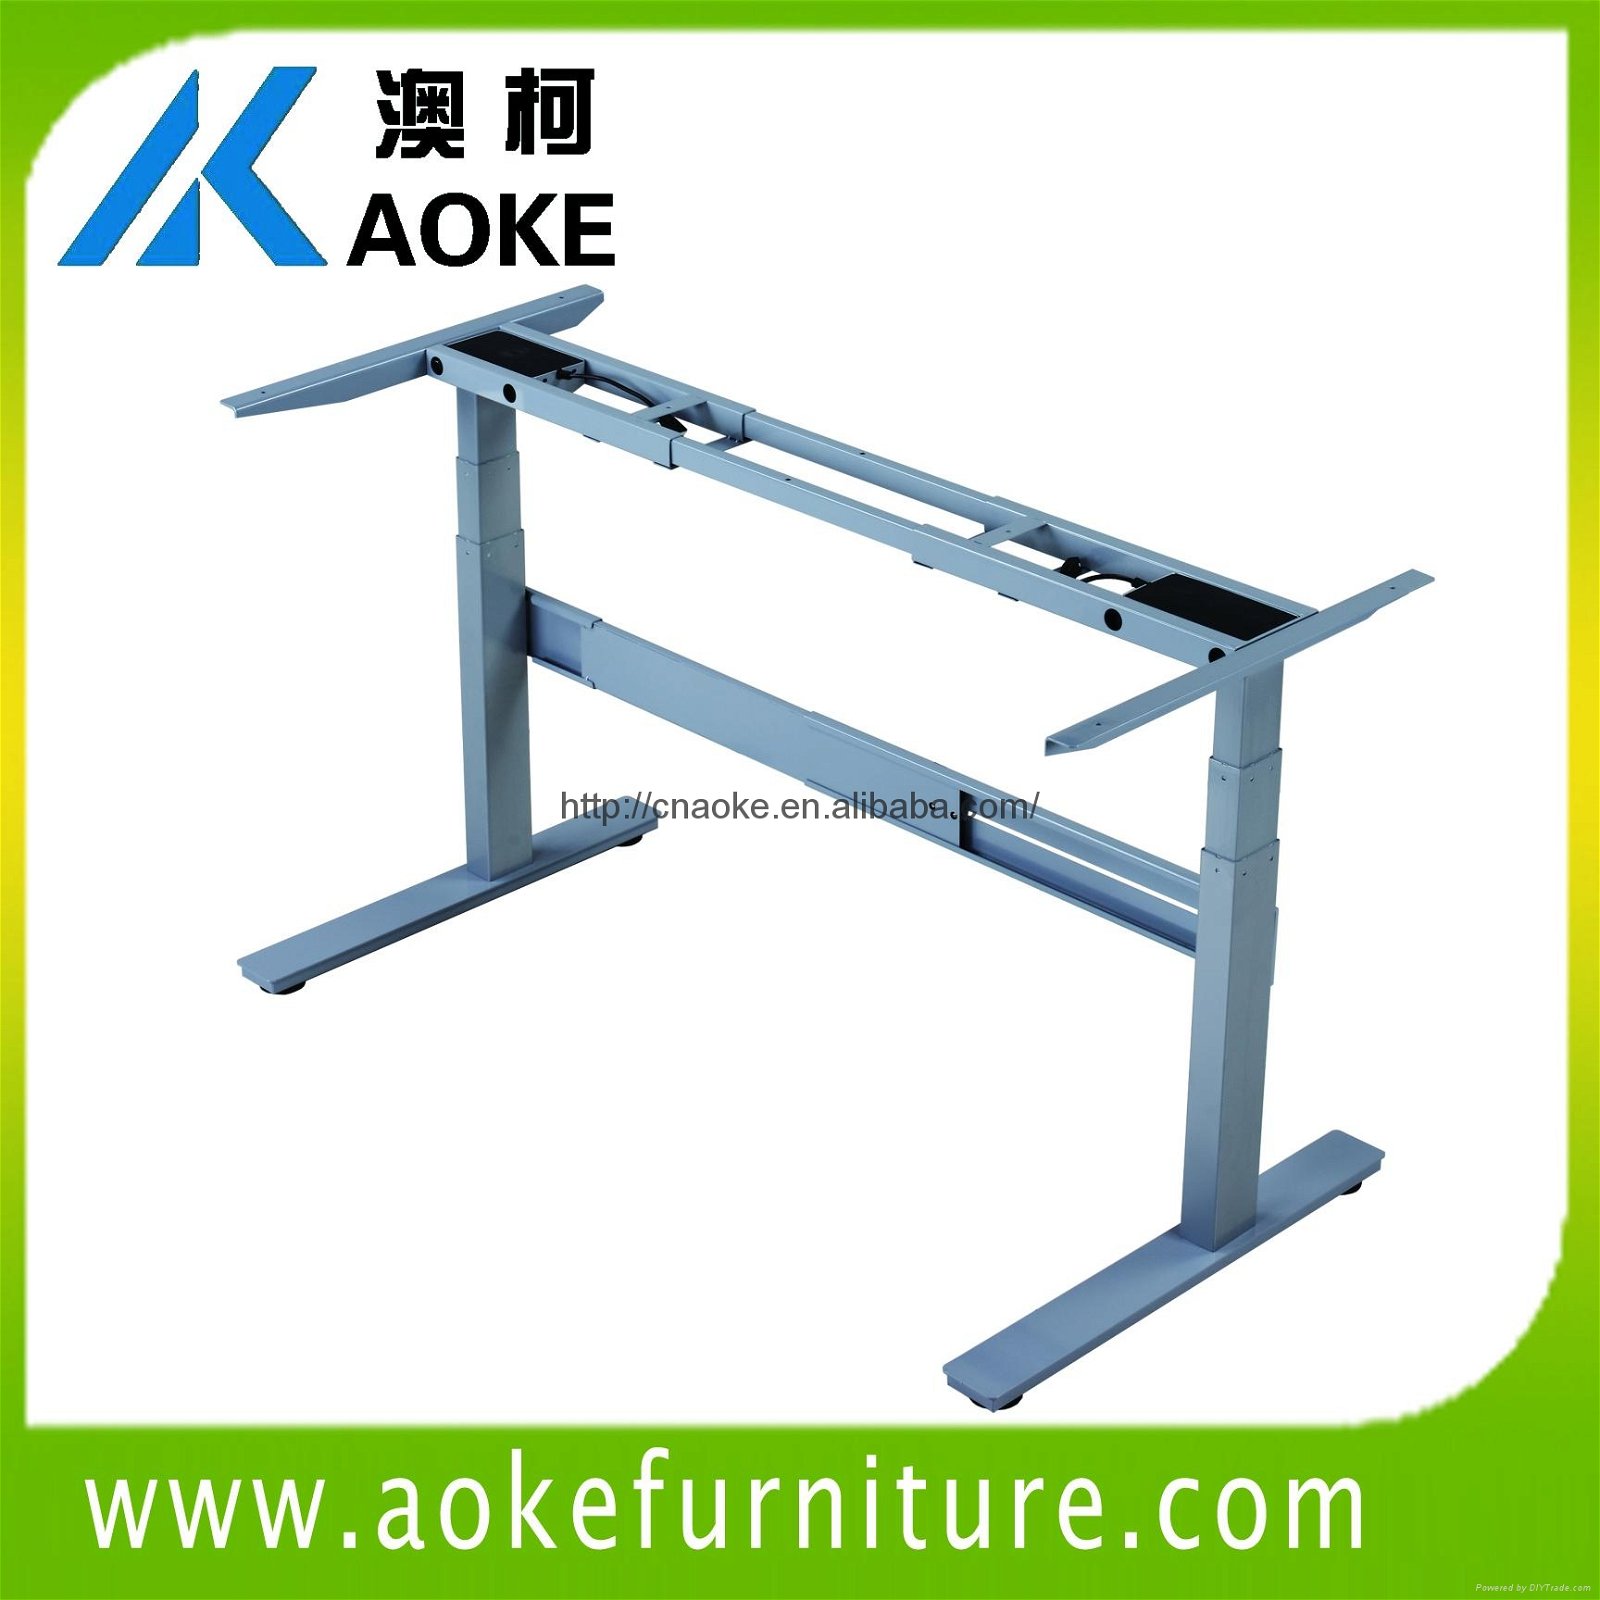 AOKE AK2RT-ZB3 electric height adjustable desk 4